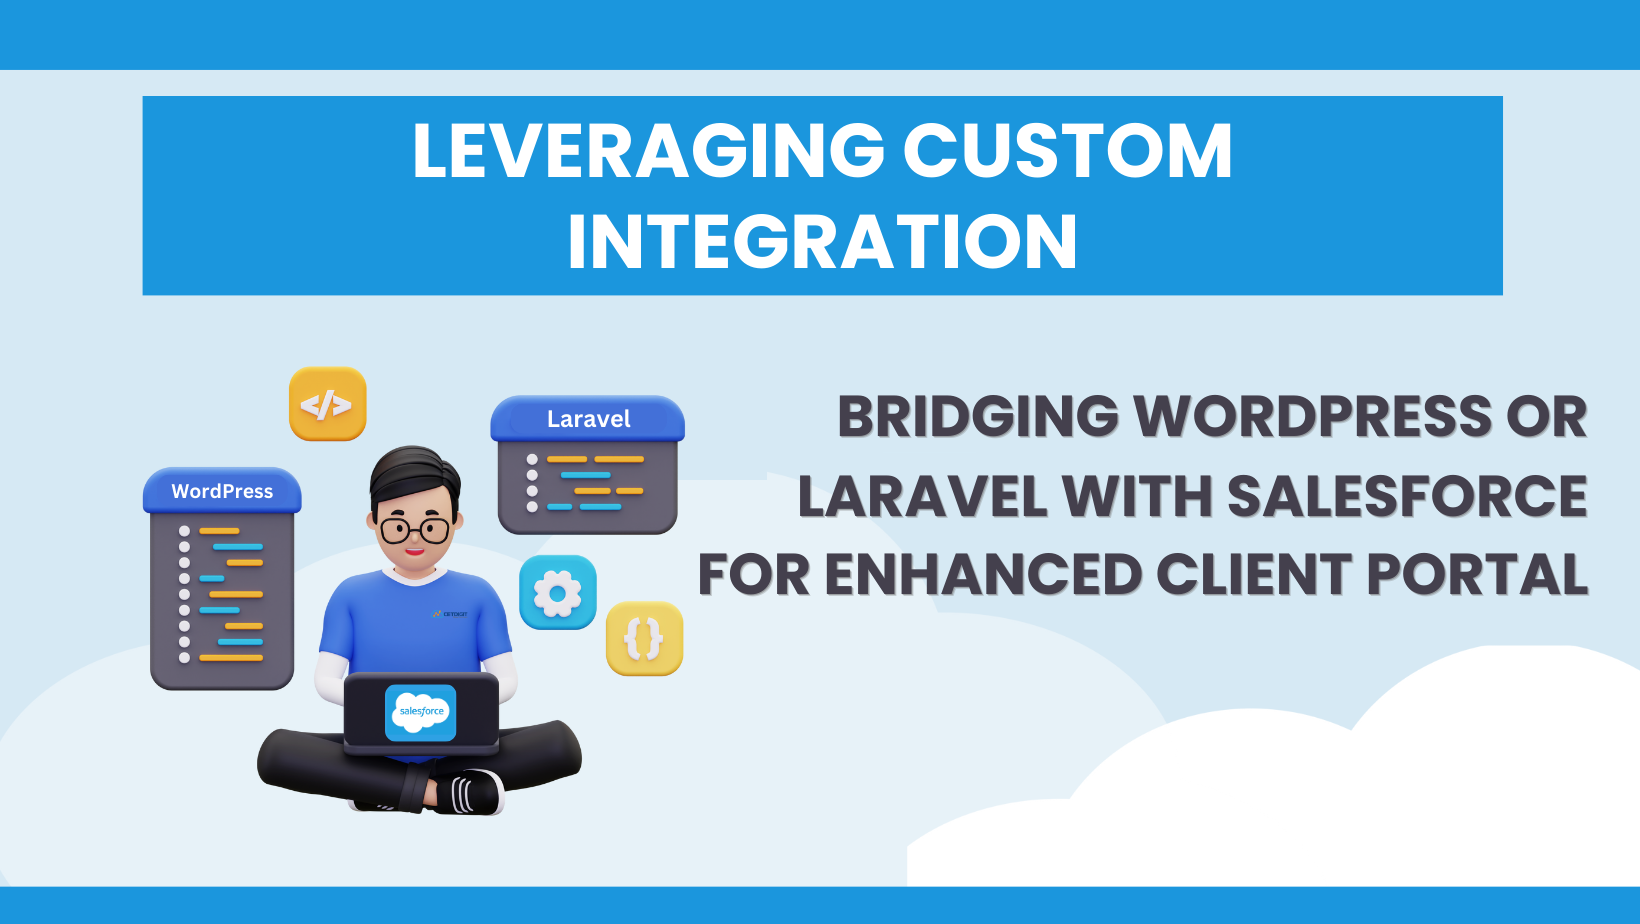 Leveraging Custom Integration: Bridging WordPress or Laravel with Salesforce for Enhanced Client Portals